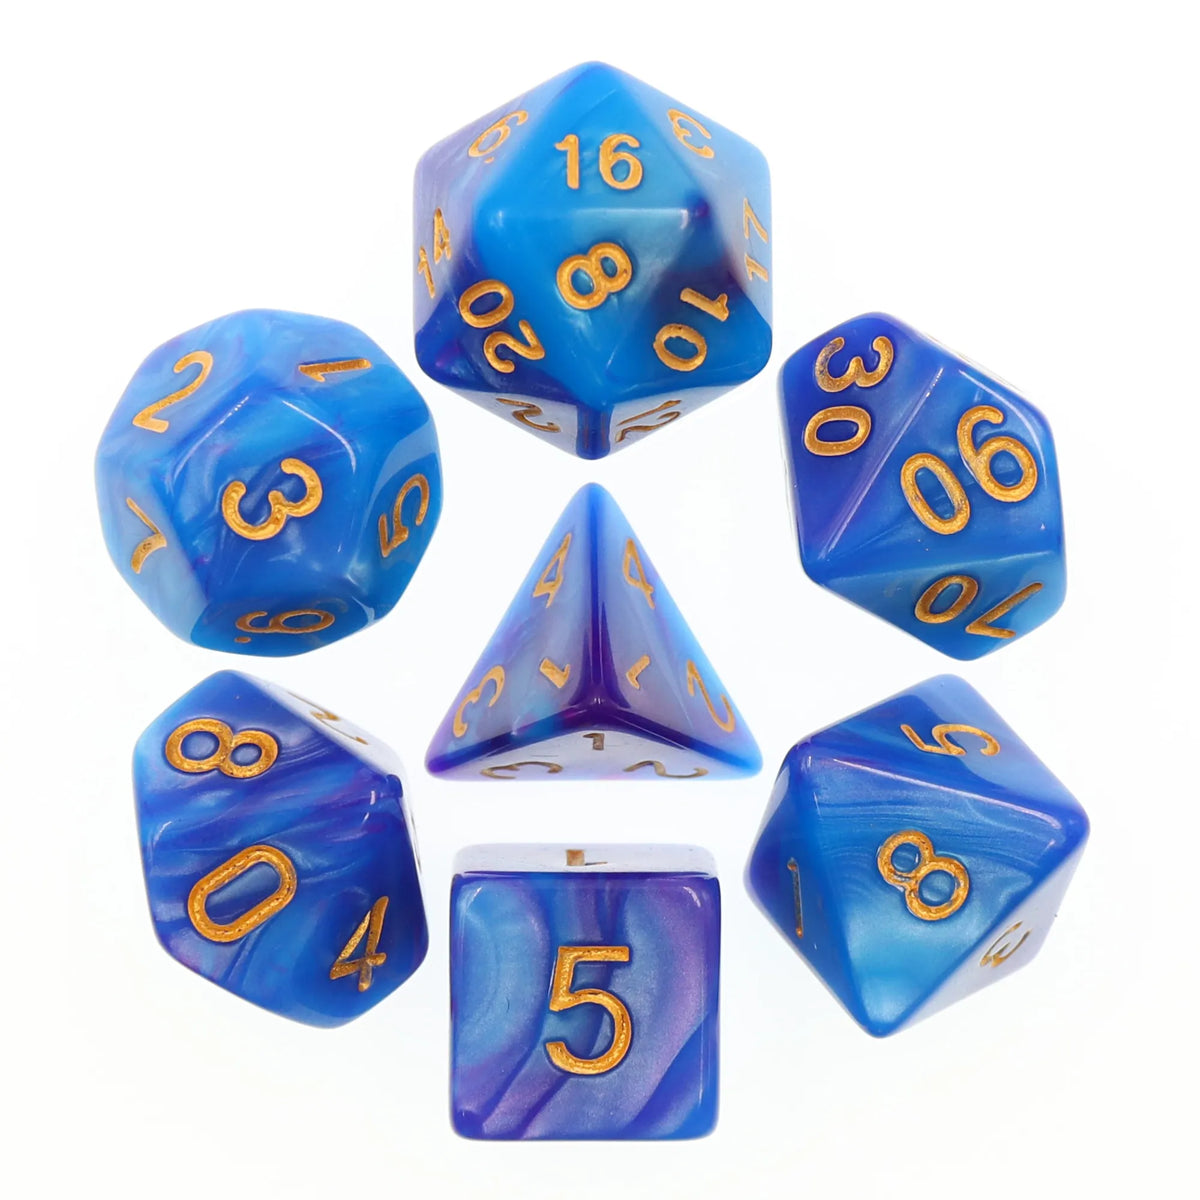 (Blue+ Deep purple) 
Blend color dice